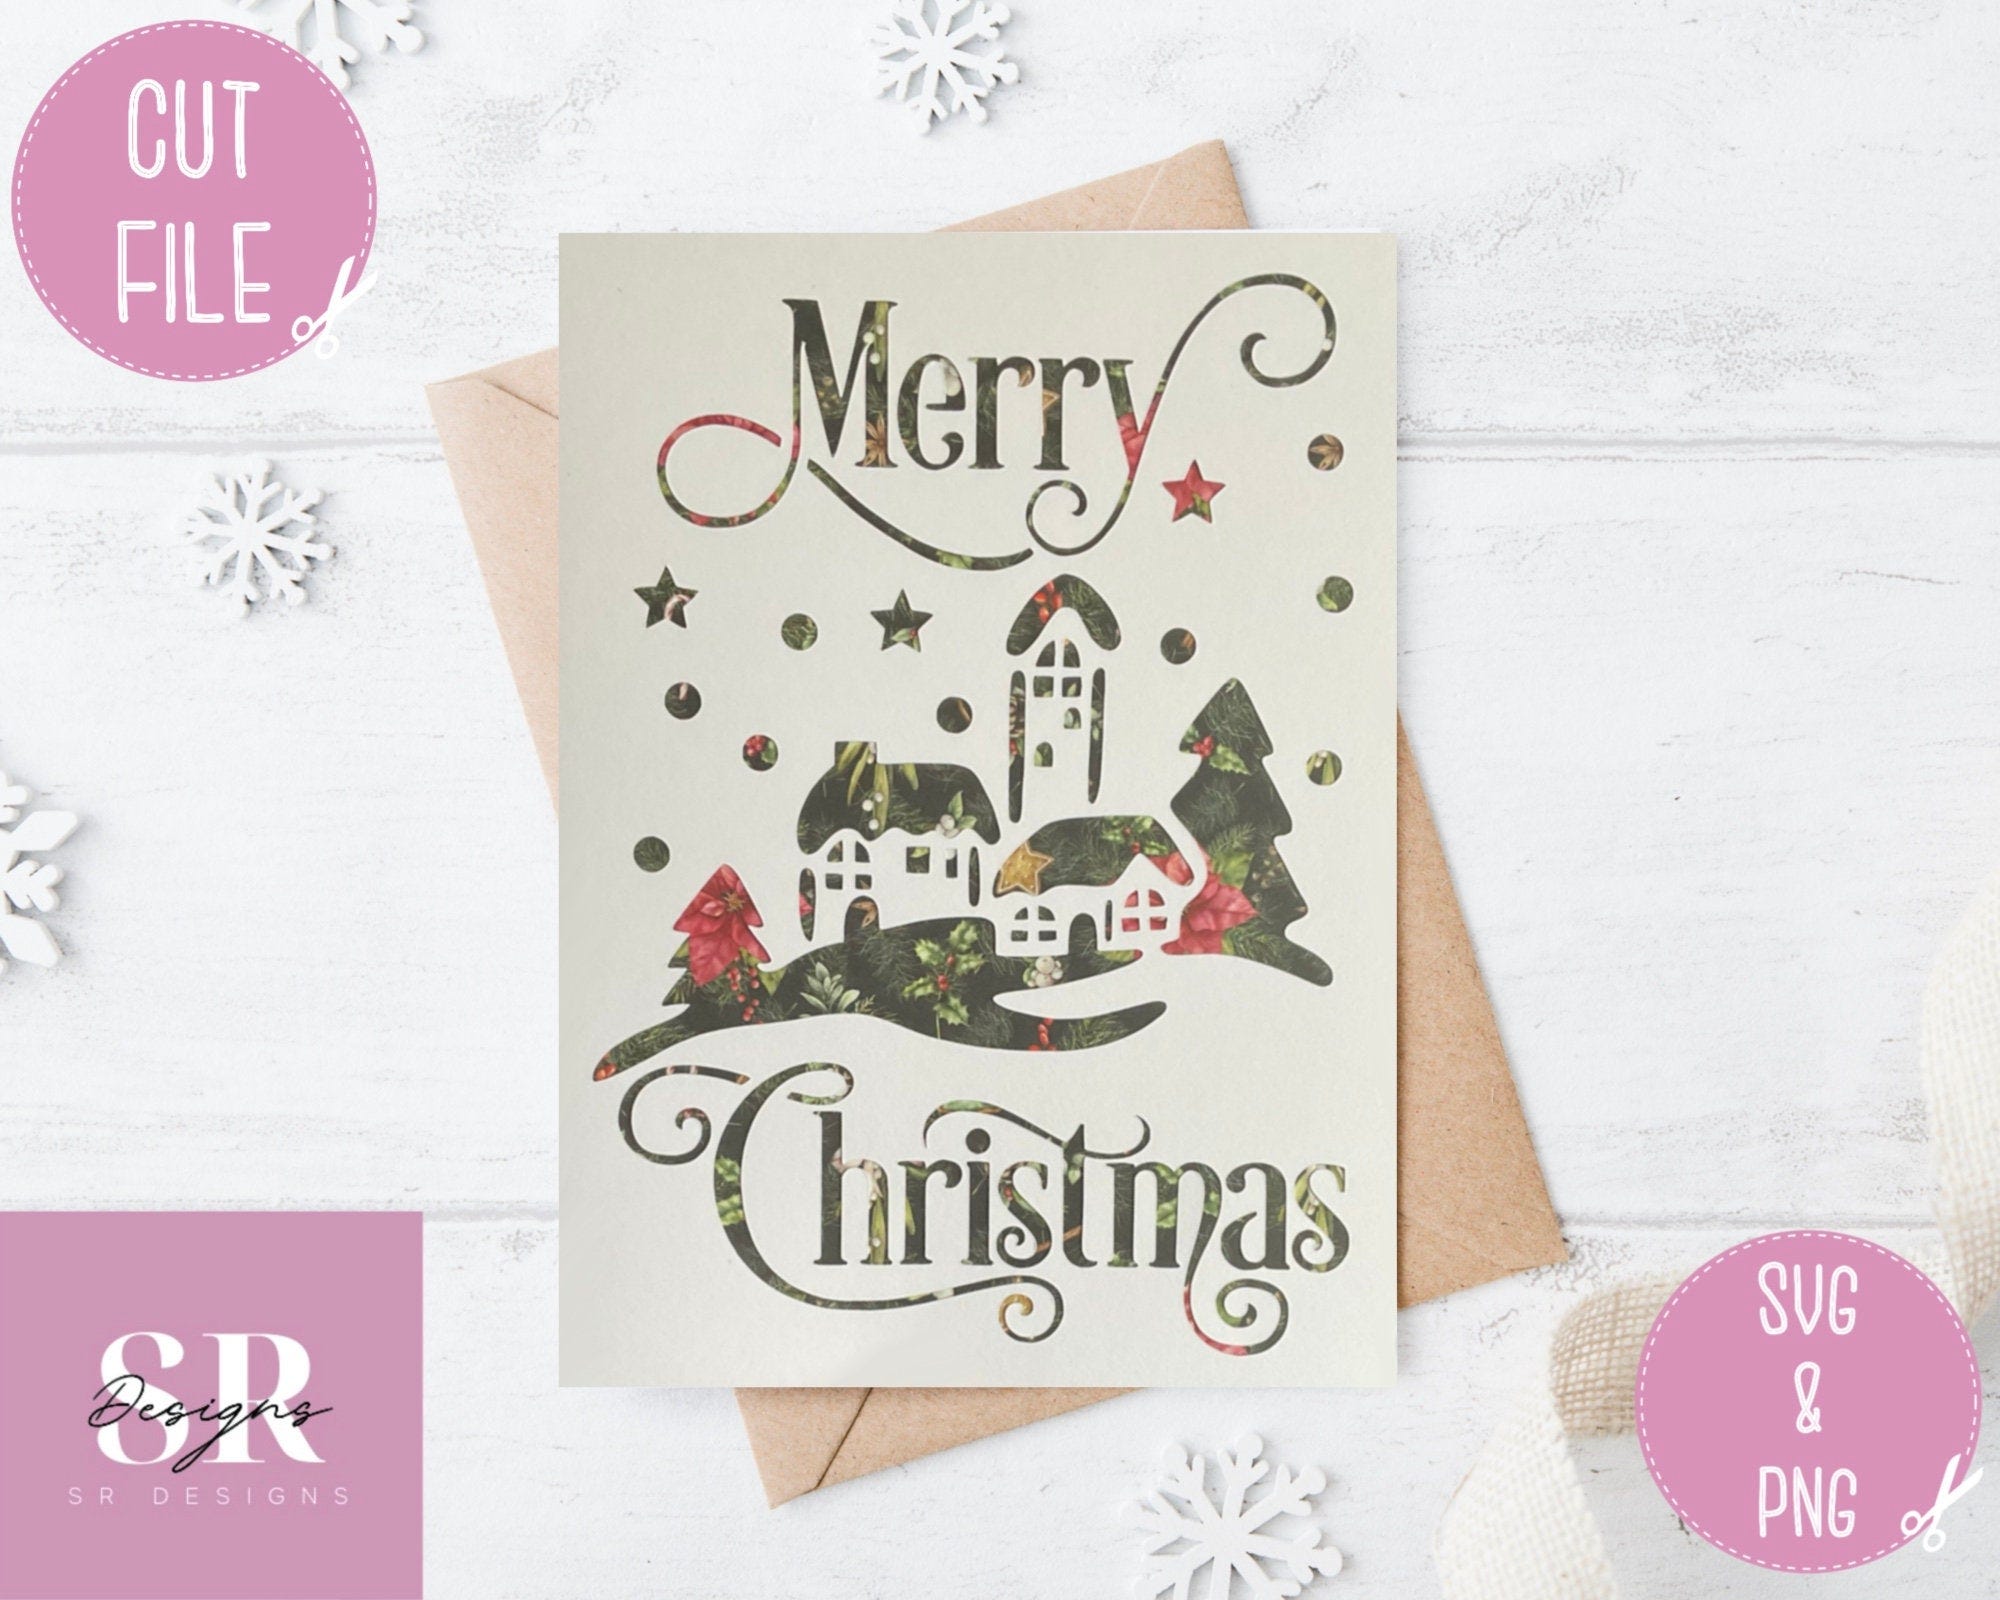 SVG: Christmas card. Christmas card svg. Merry Christmas svg. Cricut card svg. Desire Christmas font. Christmas scene card svg.